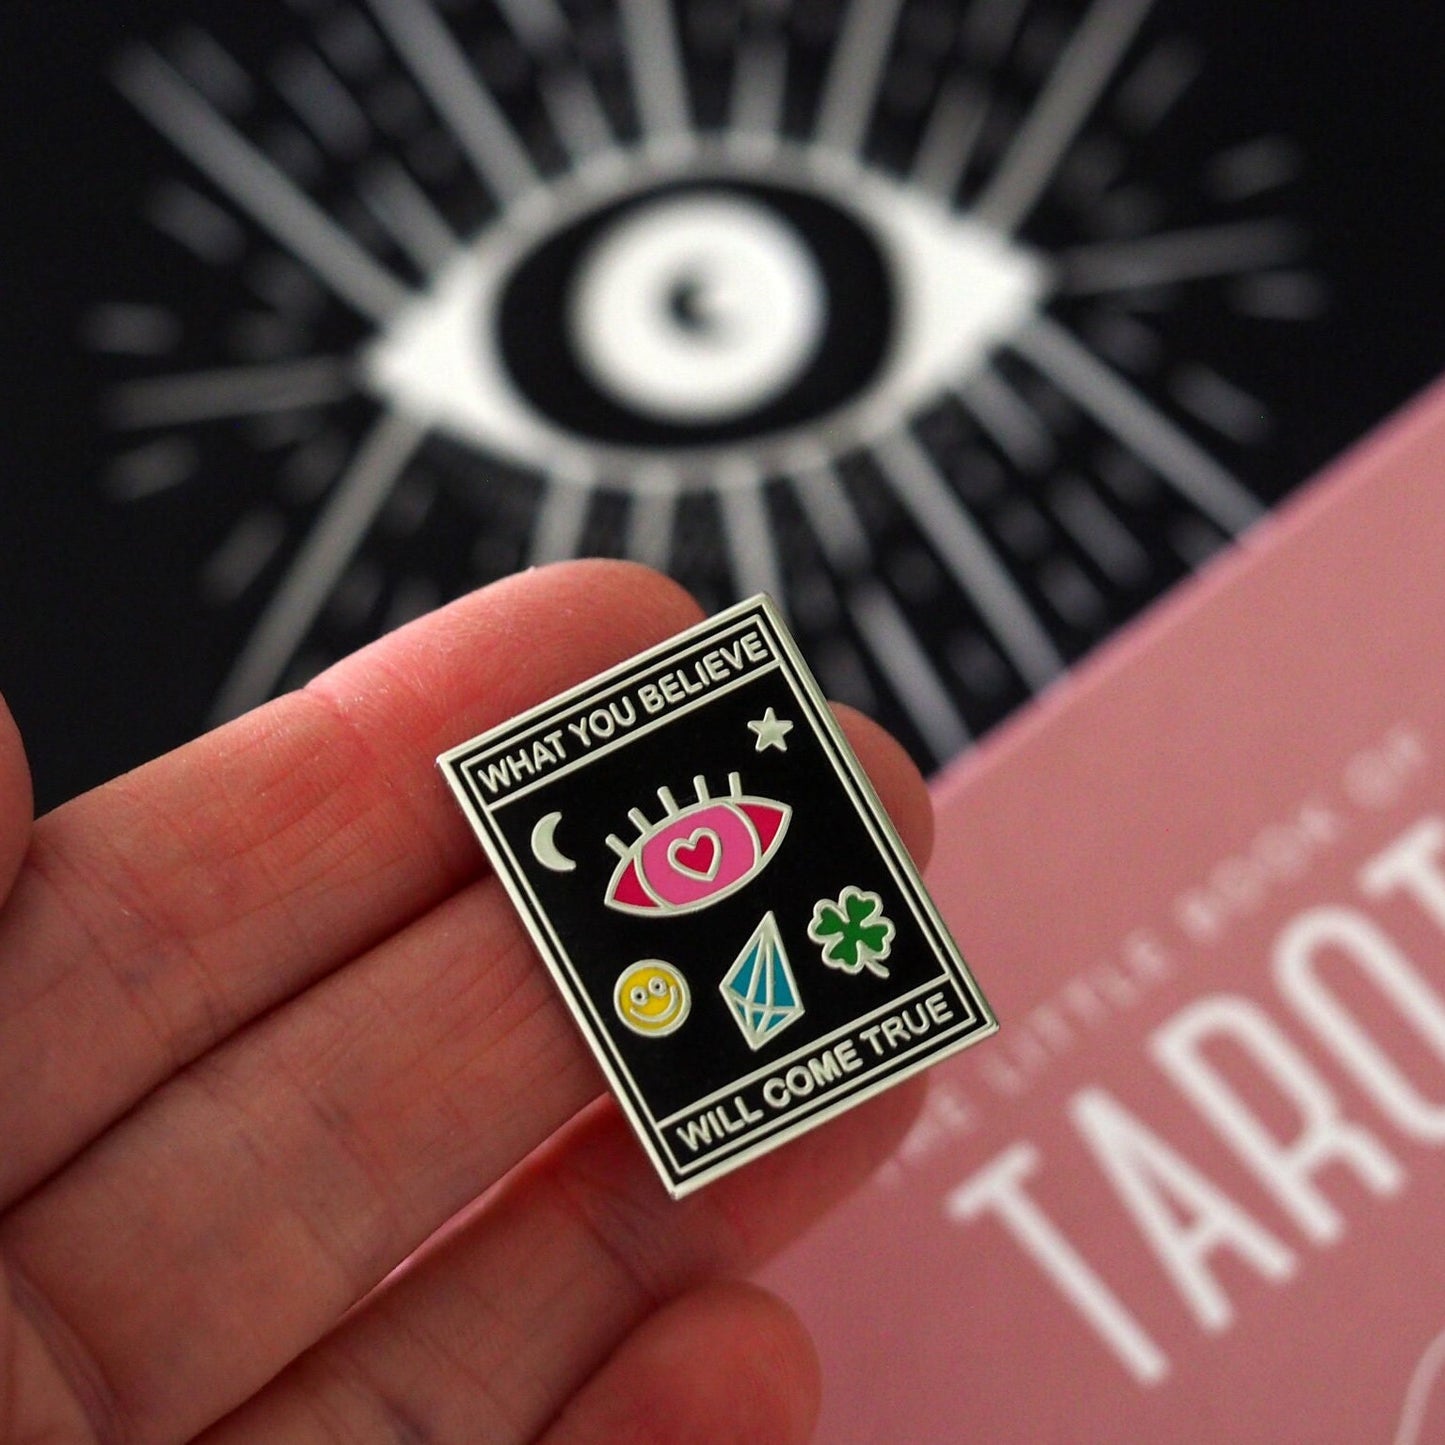 What You Believe Will Come True - Tarot Card - Enamel Pin